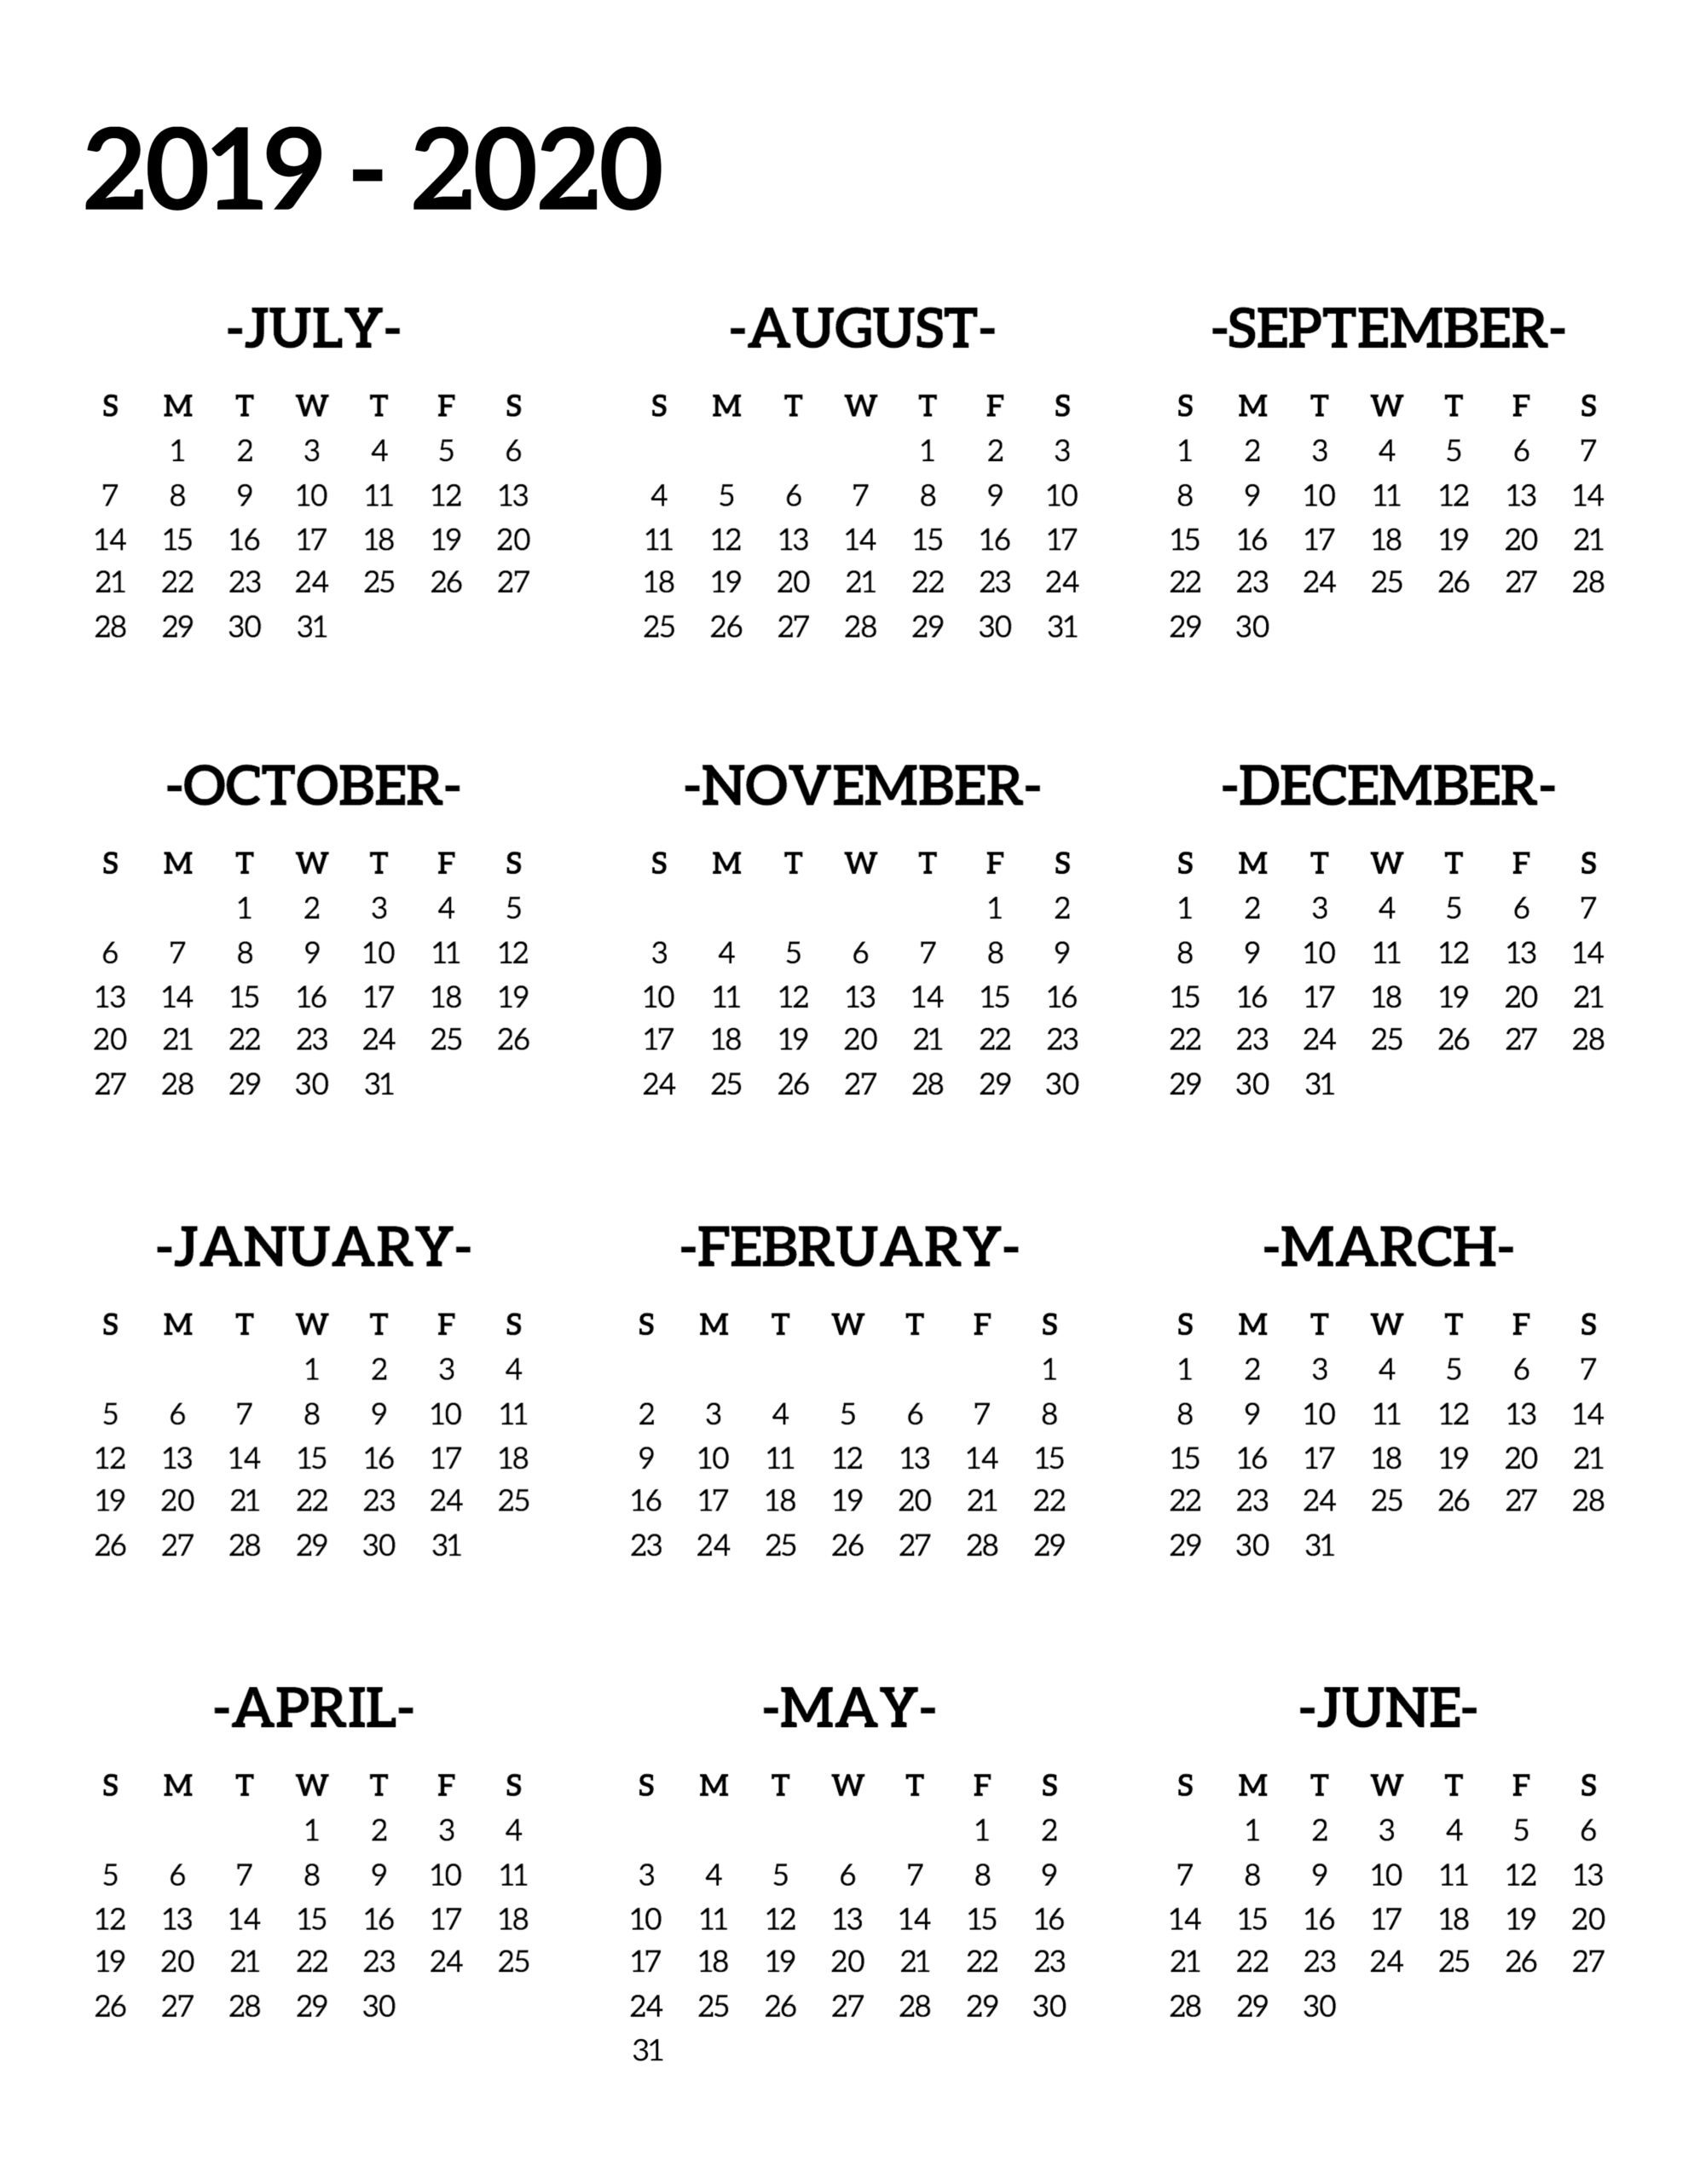 2019-2020 One Page School Calendar Printable - Paper Trail Design inside July 2019-June 2020 Printable Calendar